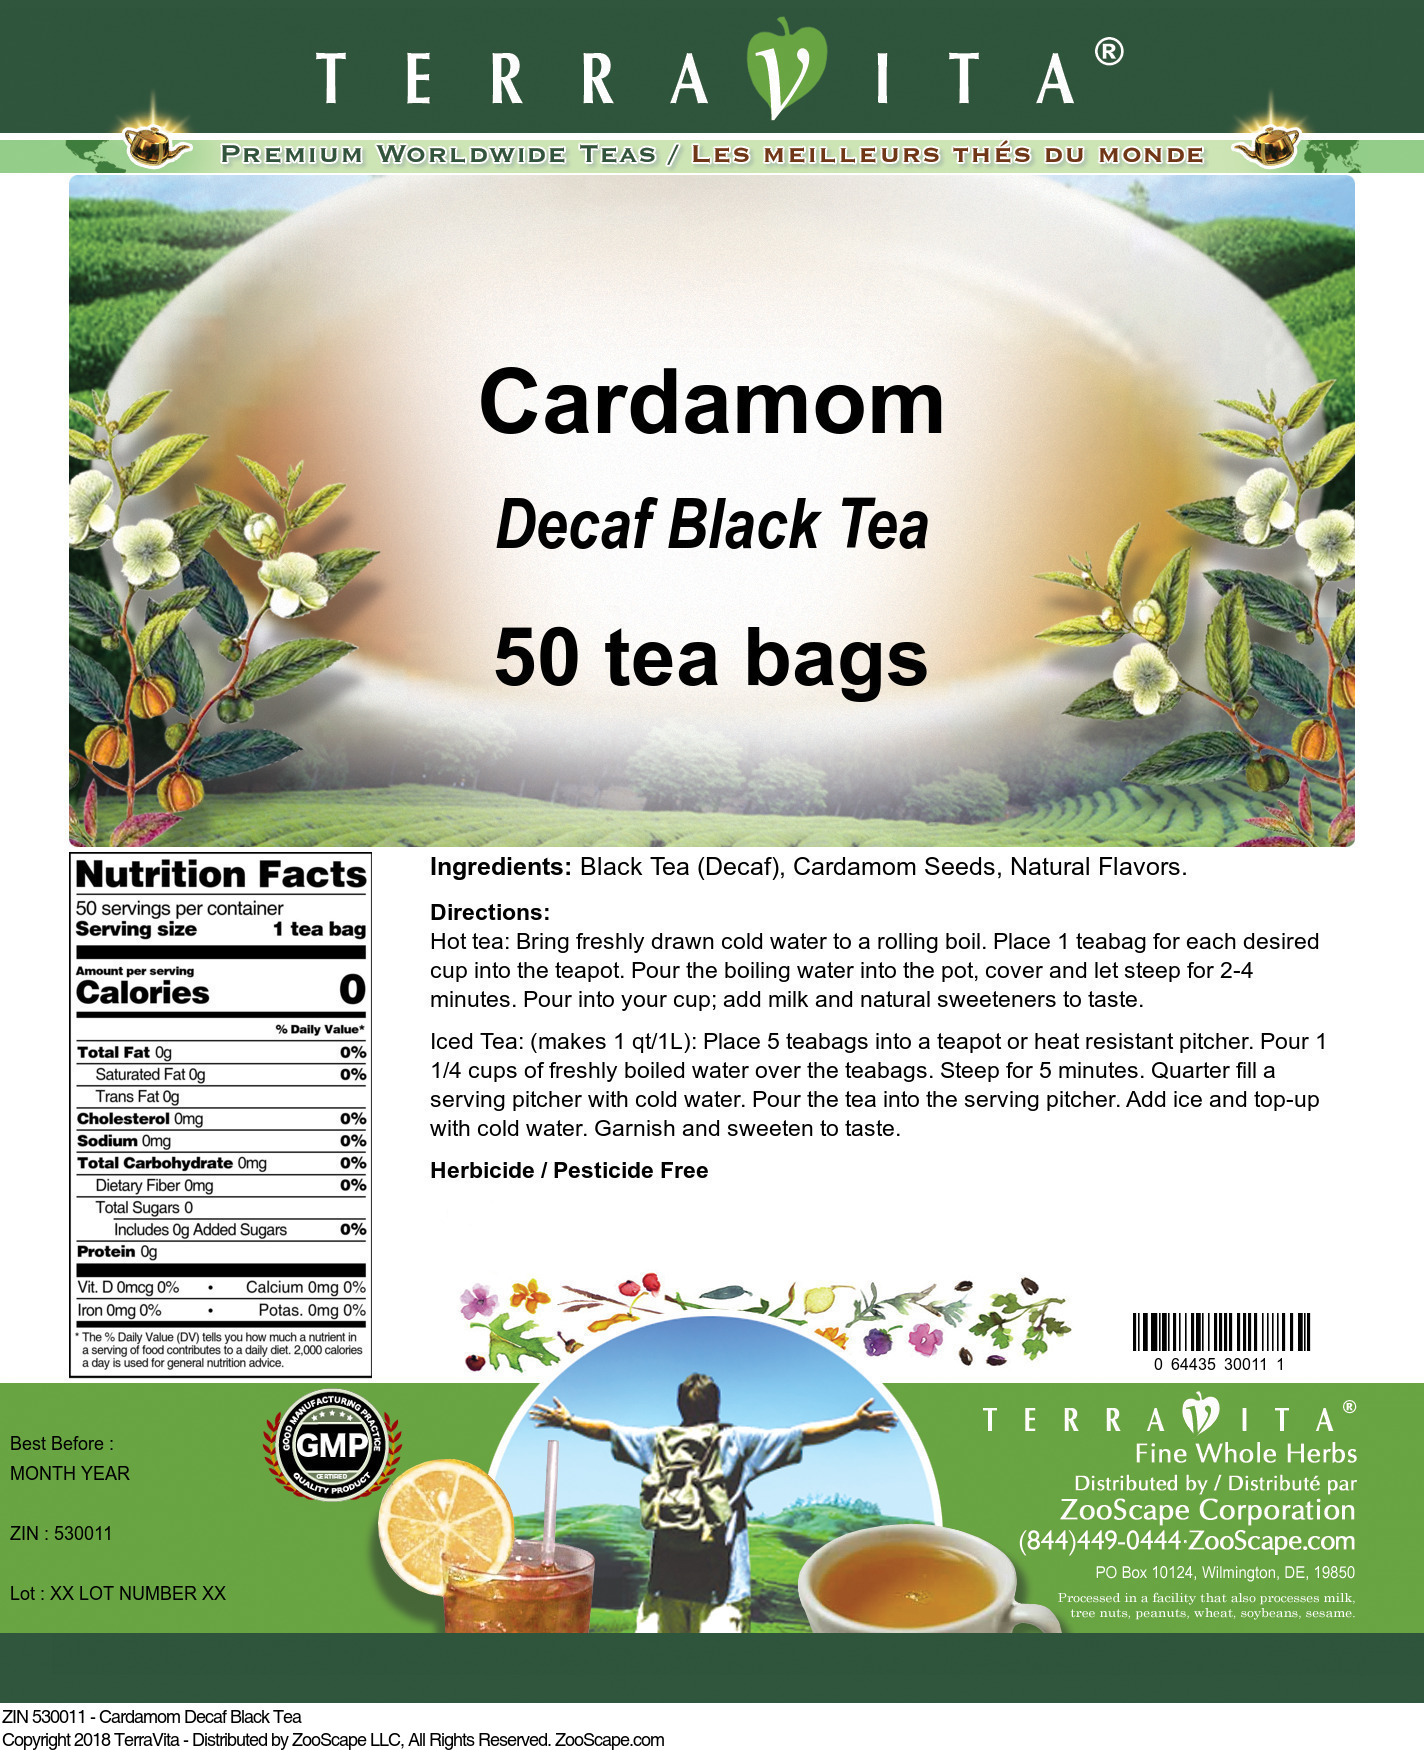 Cardamom Decaf Black Tea - Label